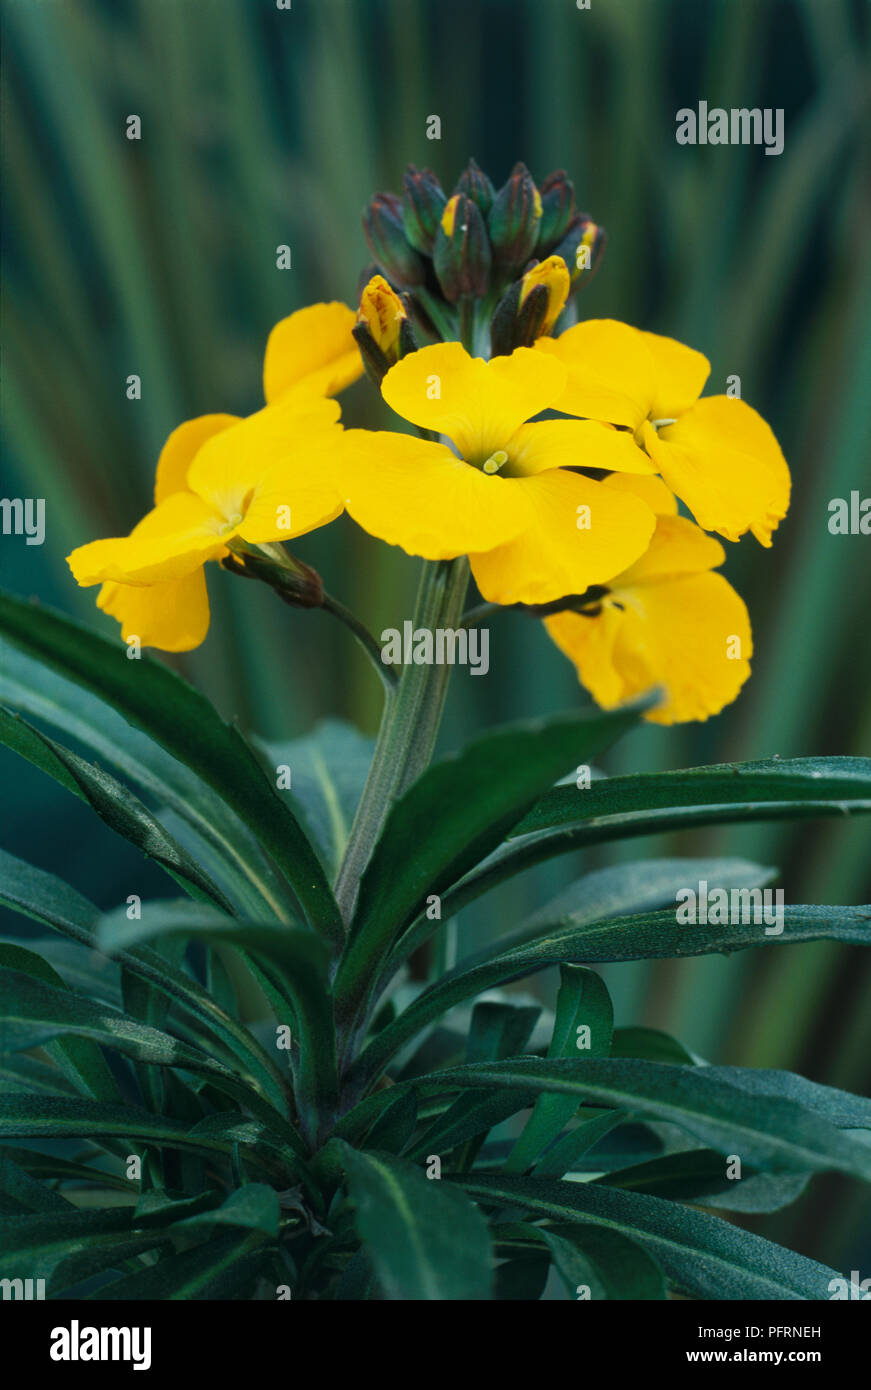 Erysimum 'Bredon' (Wallflower), yellow flowerhead consisting of flowers and buds, and dark green leaves, close-up Stock Photo